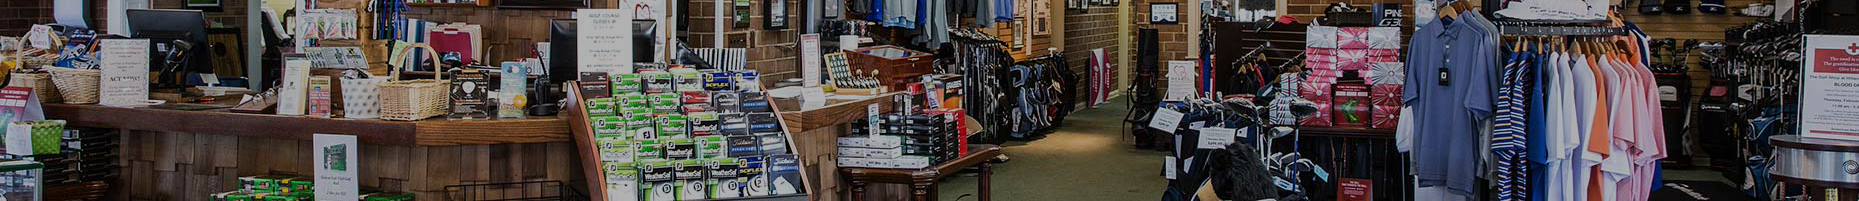 golf shop with merchandise